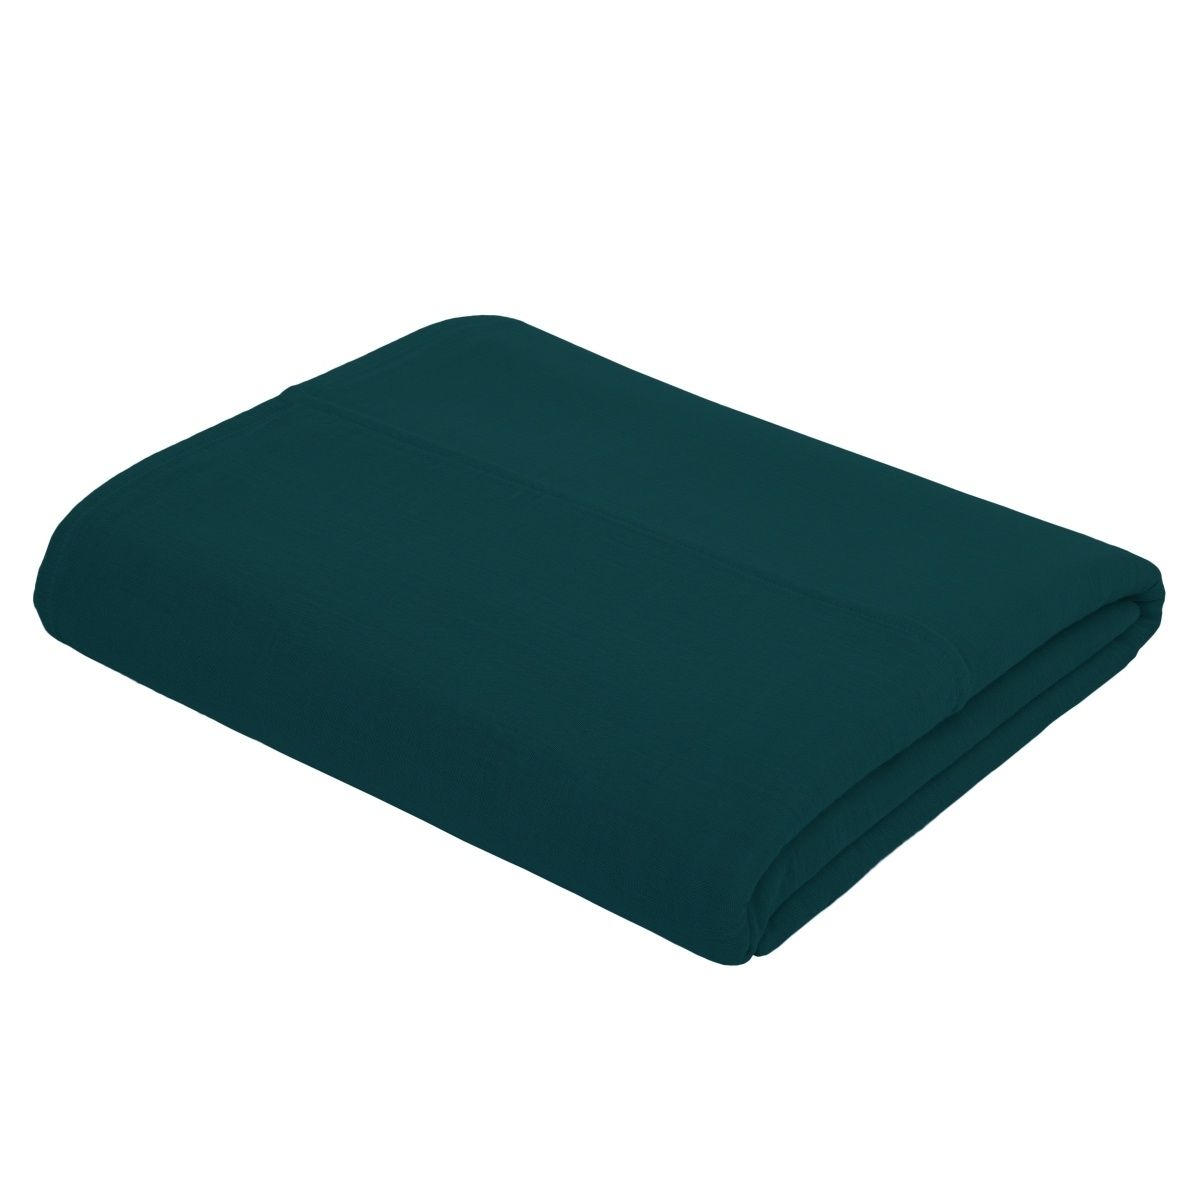 Numero 74 Top Flat Bed Sheet Plain teal blue 7400000123267 